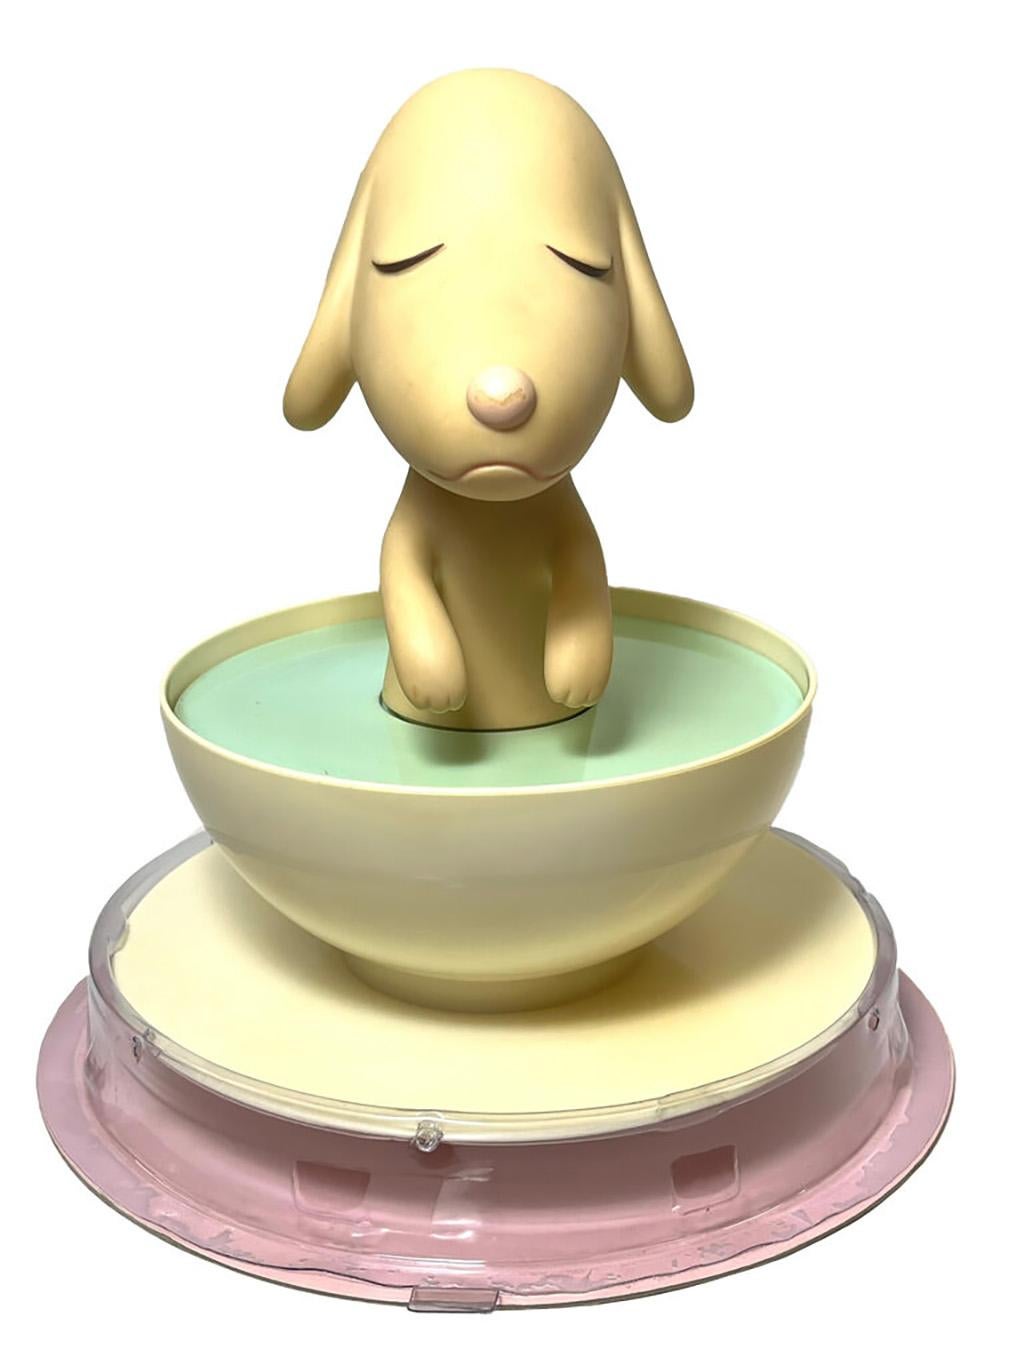 Yoshimoto Pup Cup art toy 2003 (Yoshitomo Nara Pup Cup 2003) For Sale 2